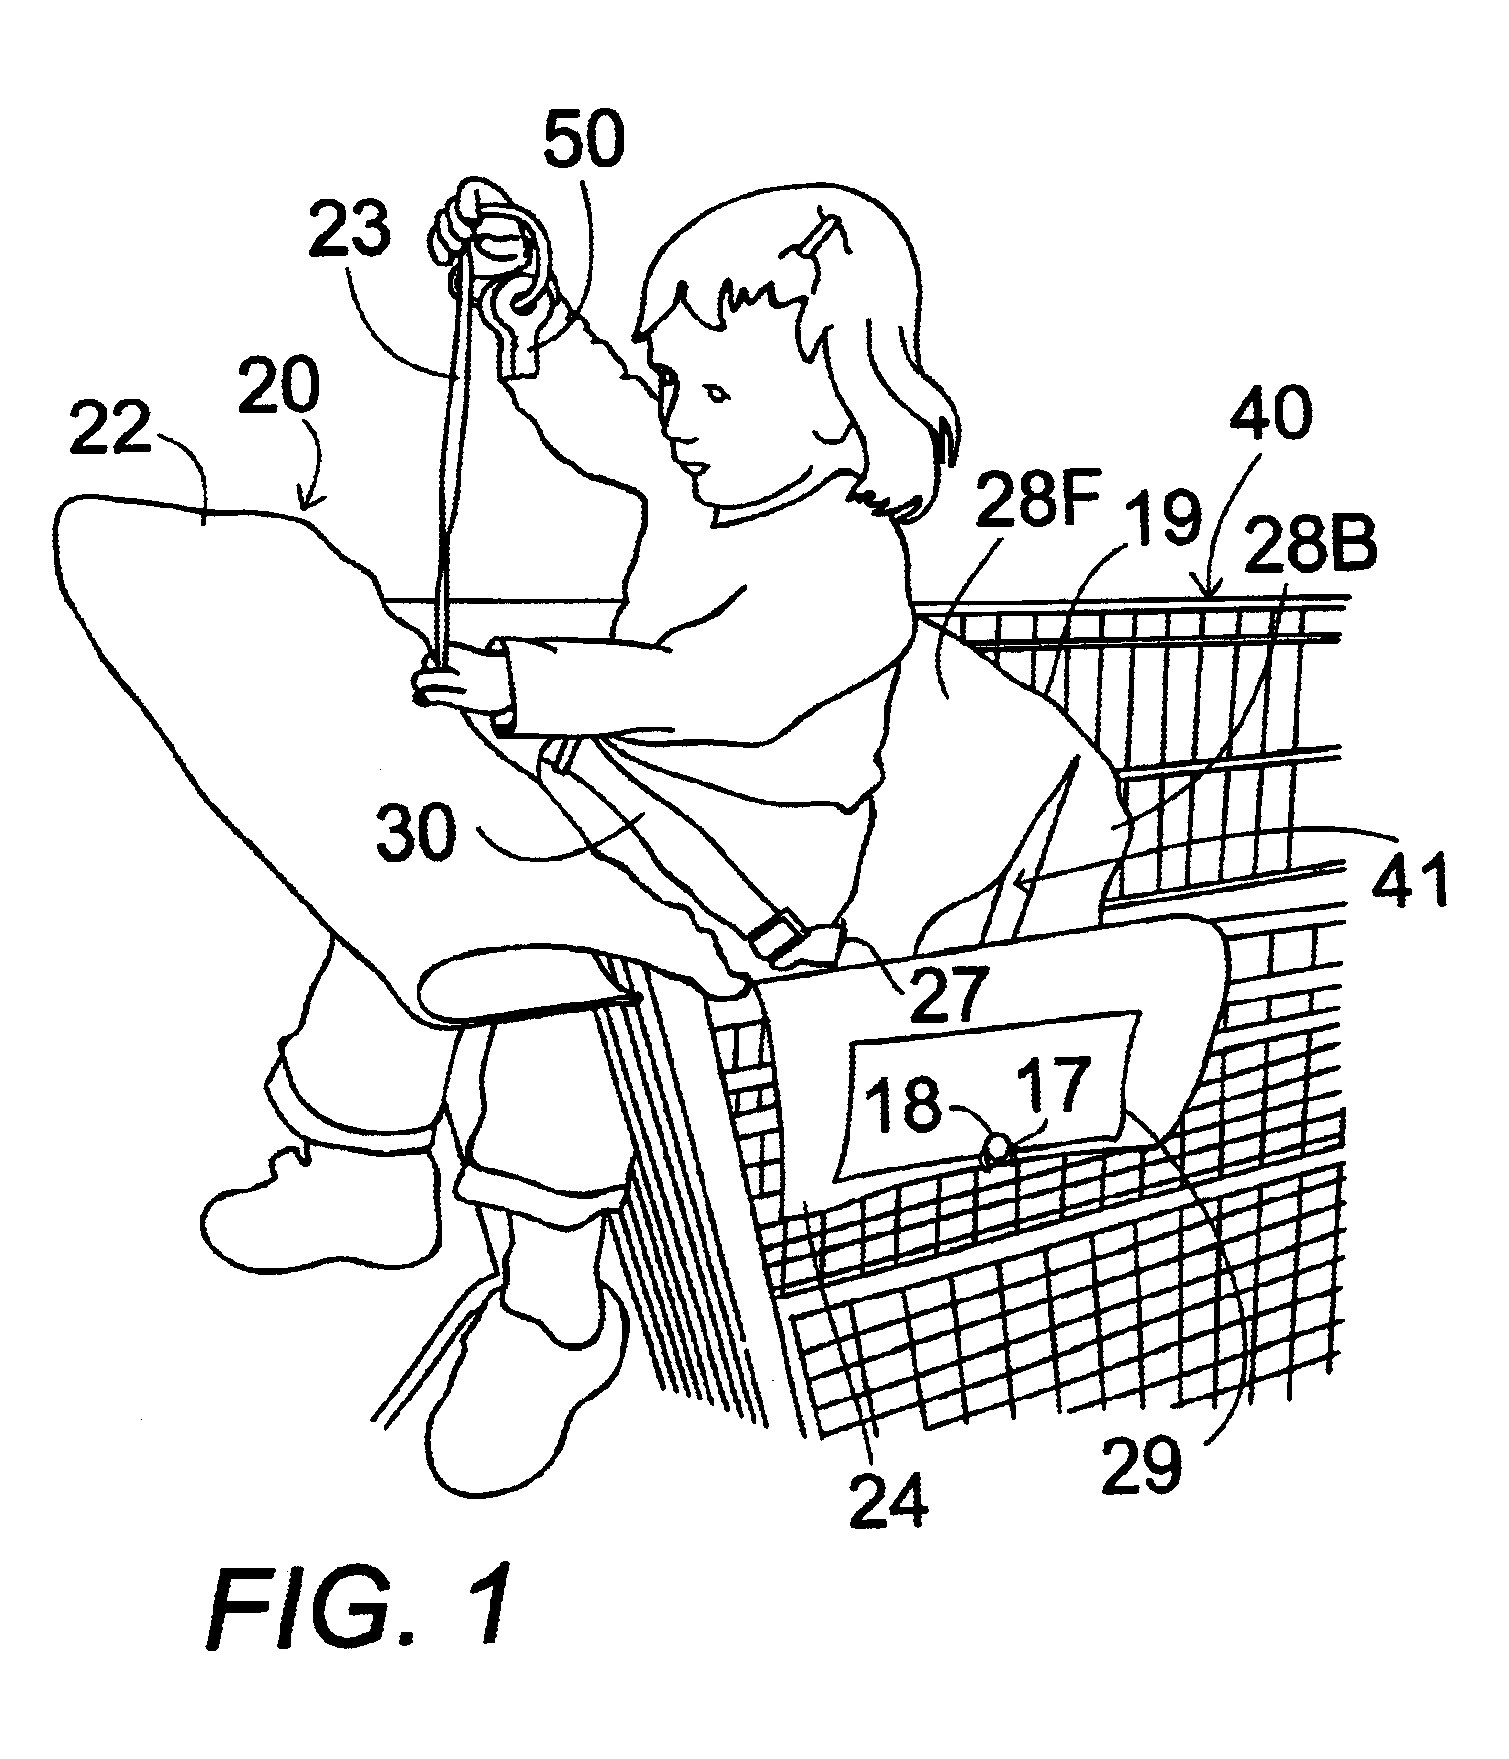 Sanitary shopping cart seat cover